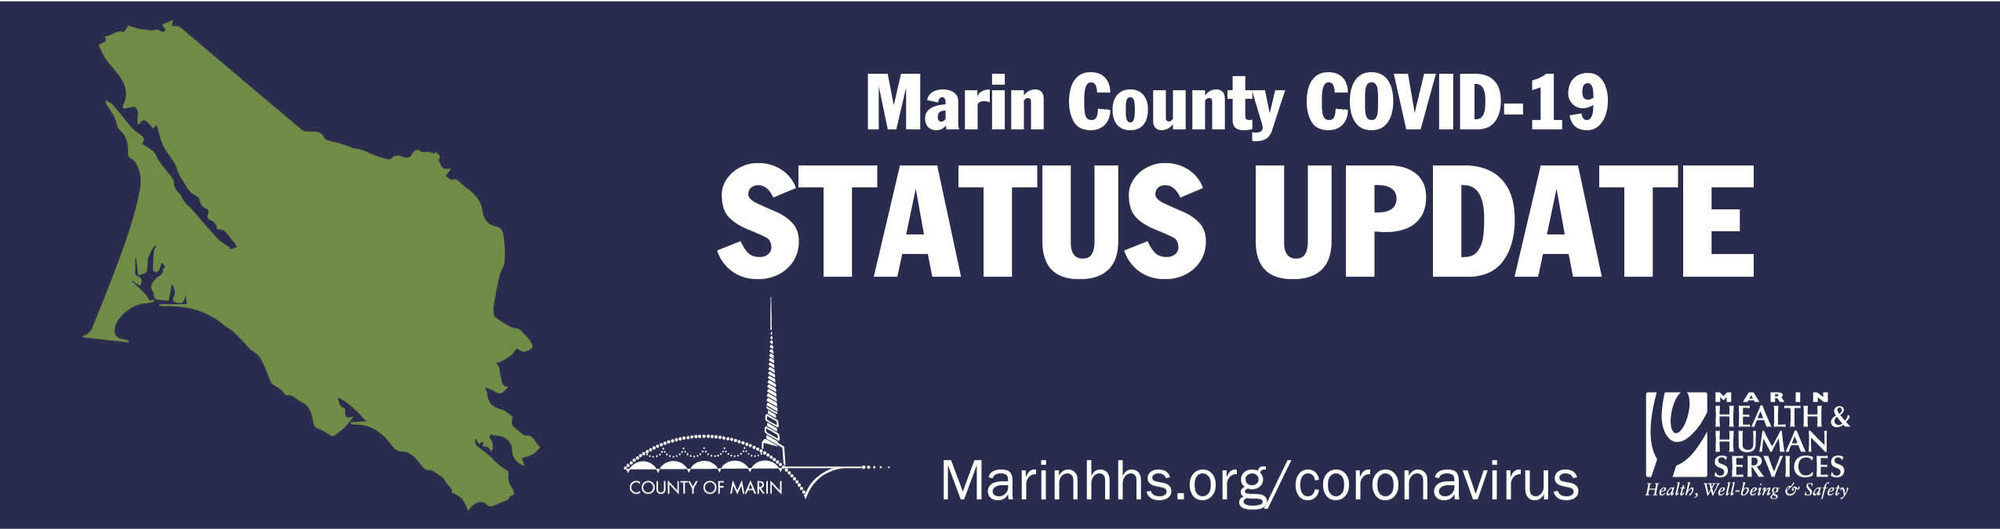 Marin County COVID-19 Status Update